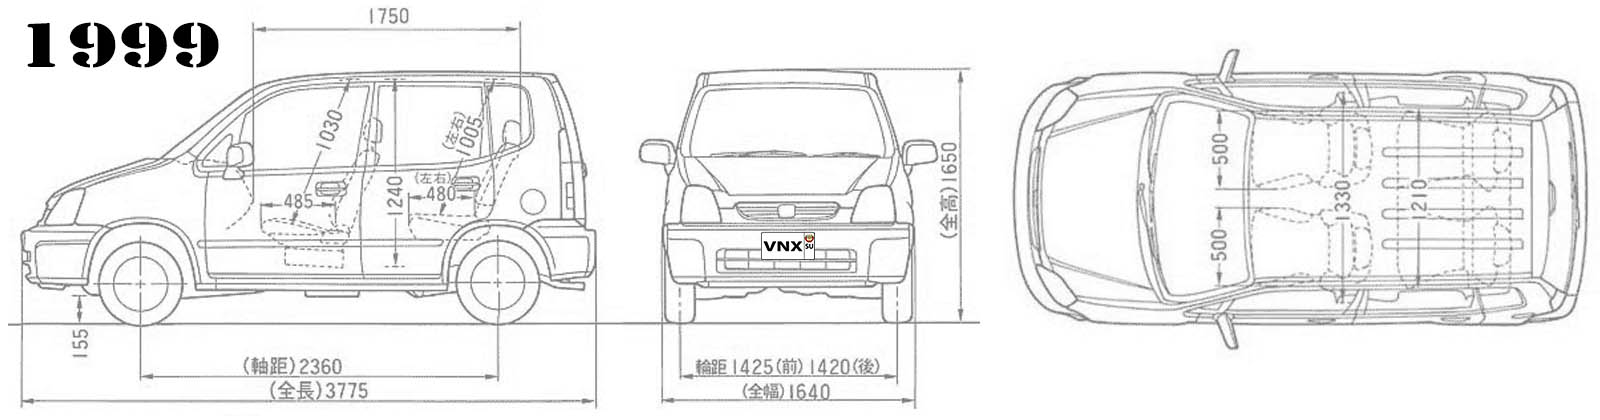 Габаритные размеры Хонда Капа 1998-2002 (dimensions Honda Capa GA4/GA6)